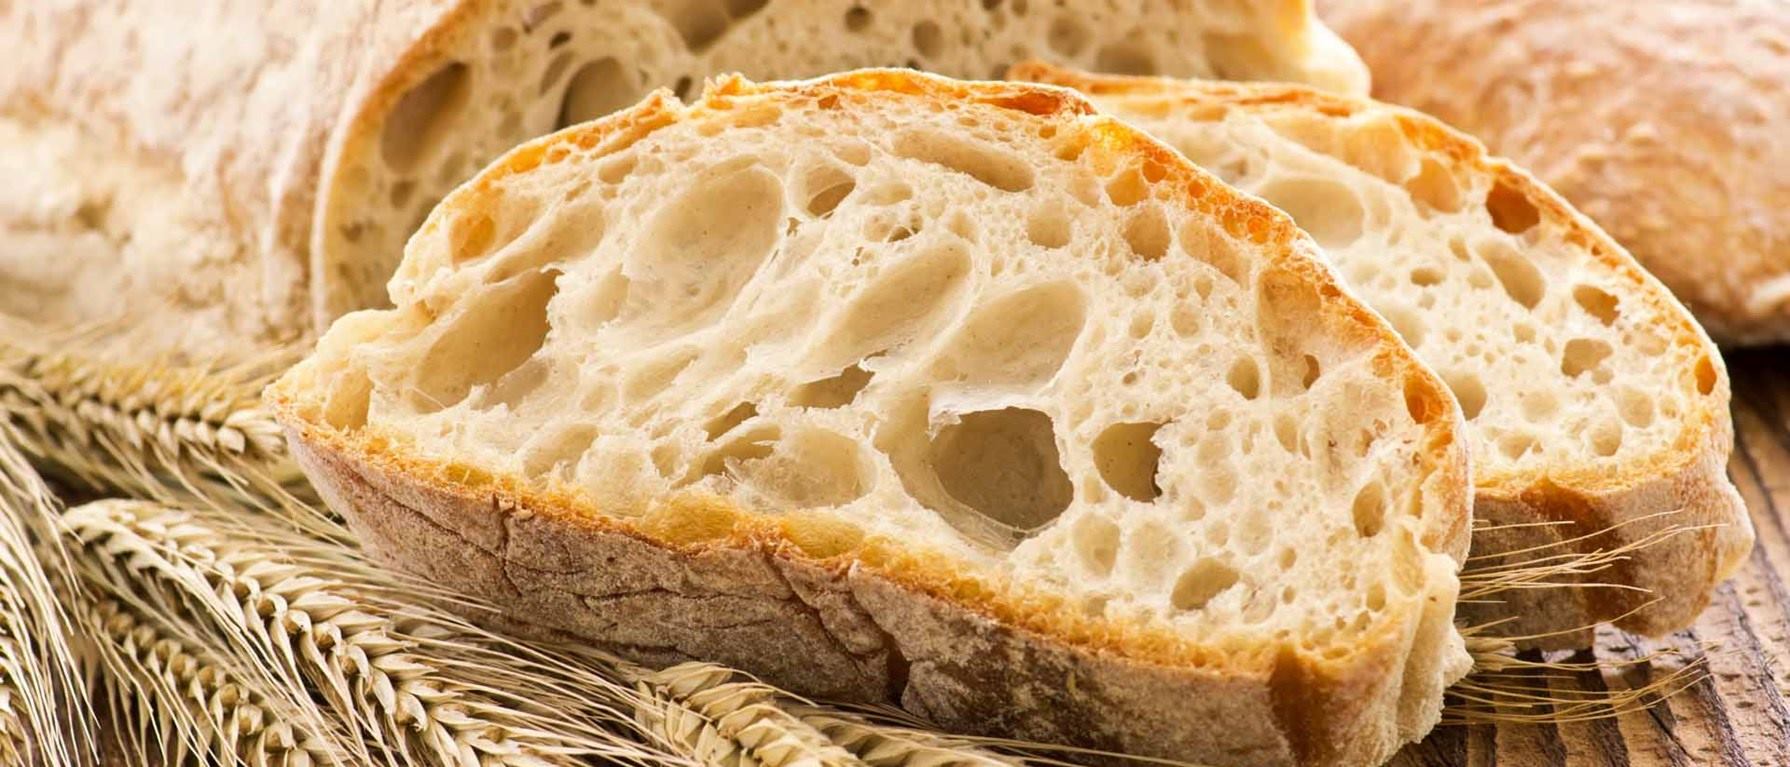 Pan en tajadas